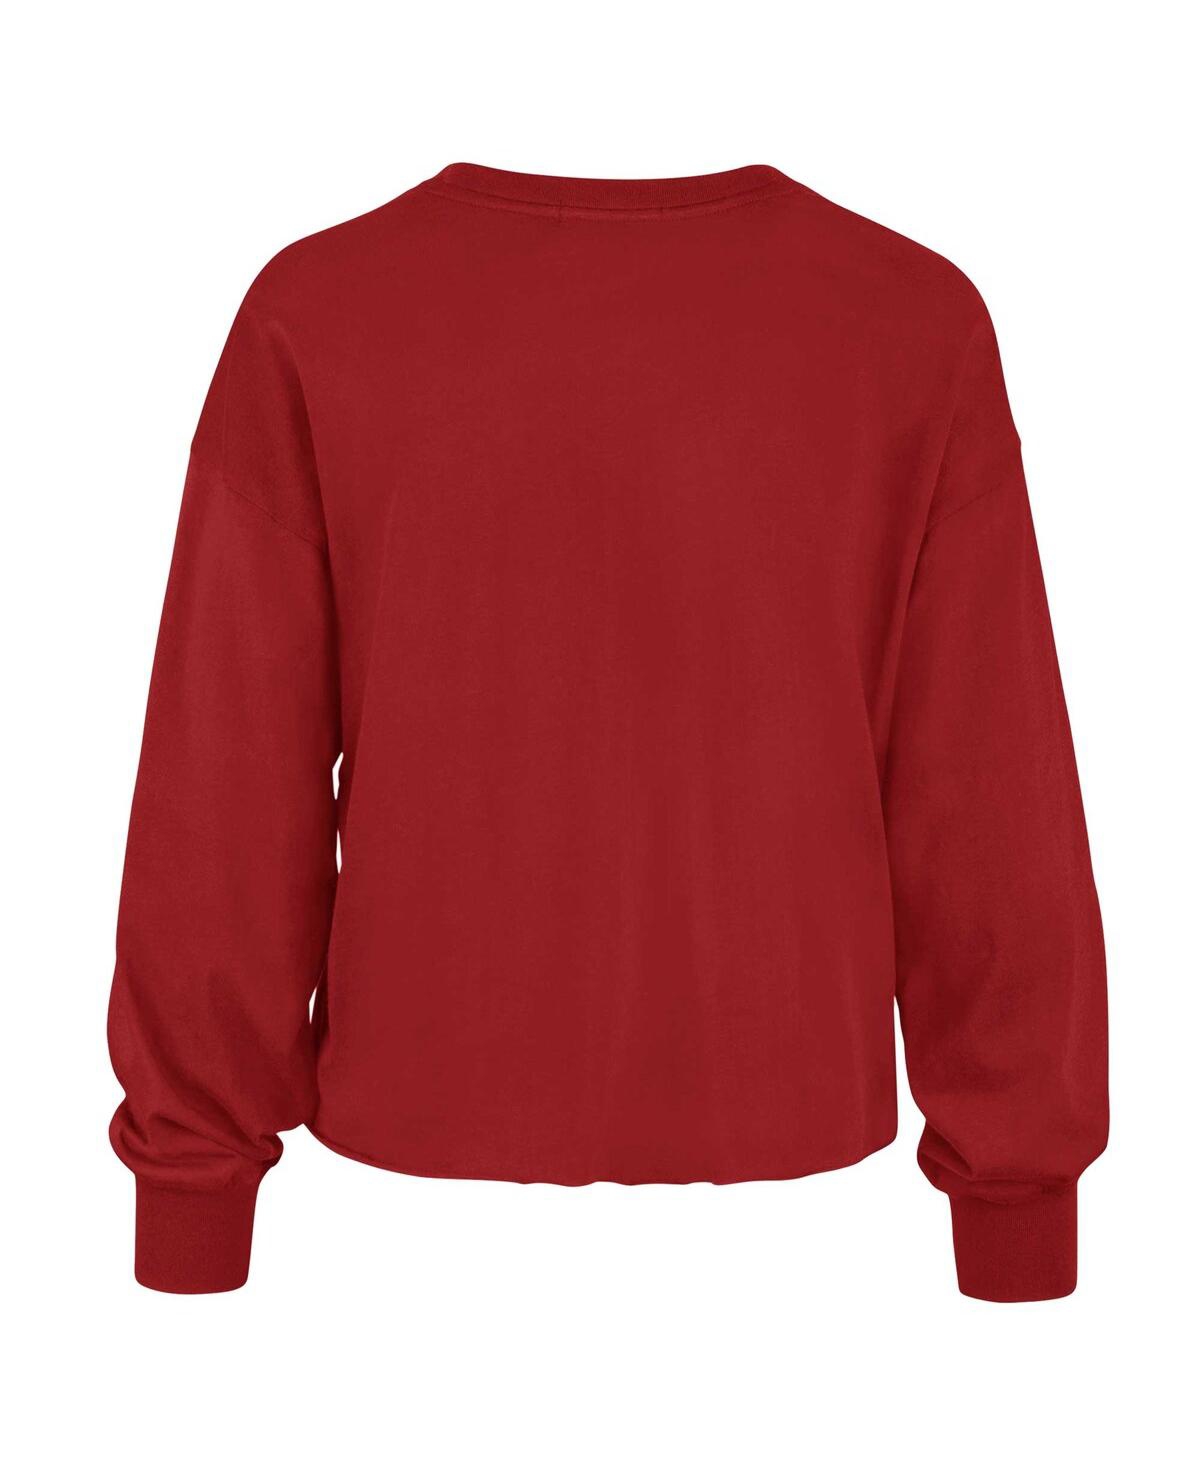 Shop 47 Brand Women's ' Red Distressed Georgia Bulldogs Bottom Line Parkway Long Sleeve T-shirt